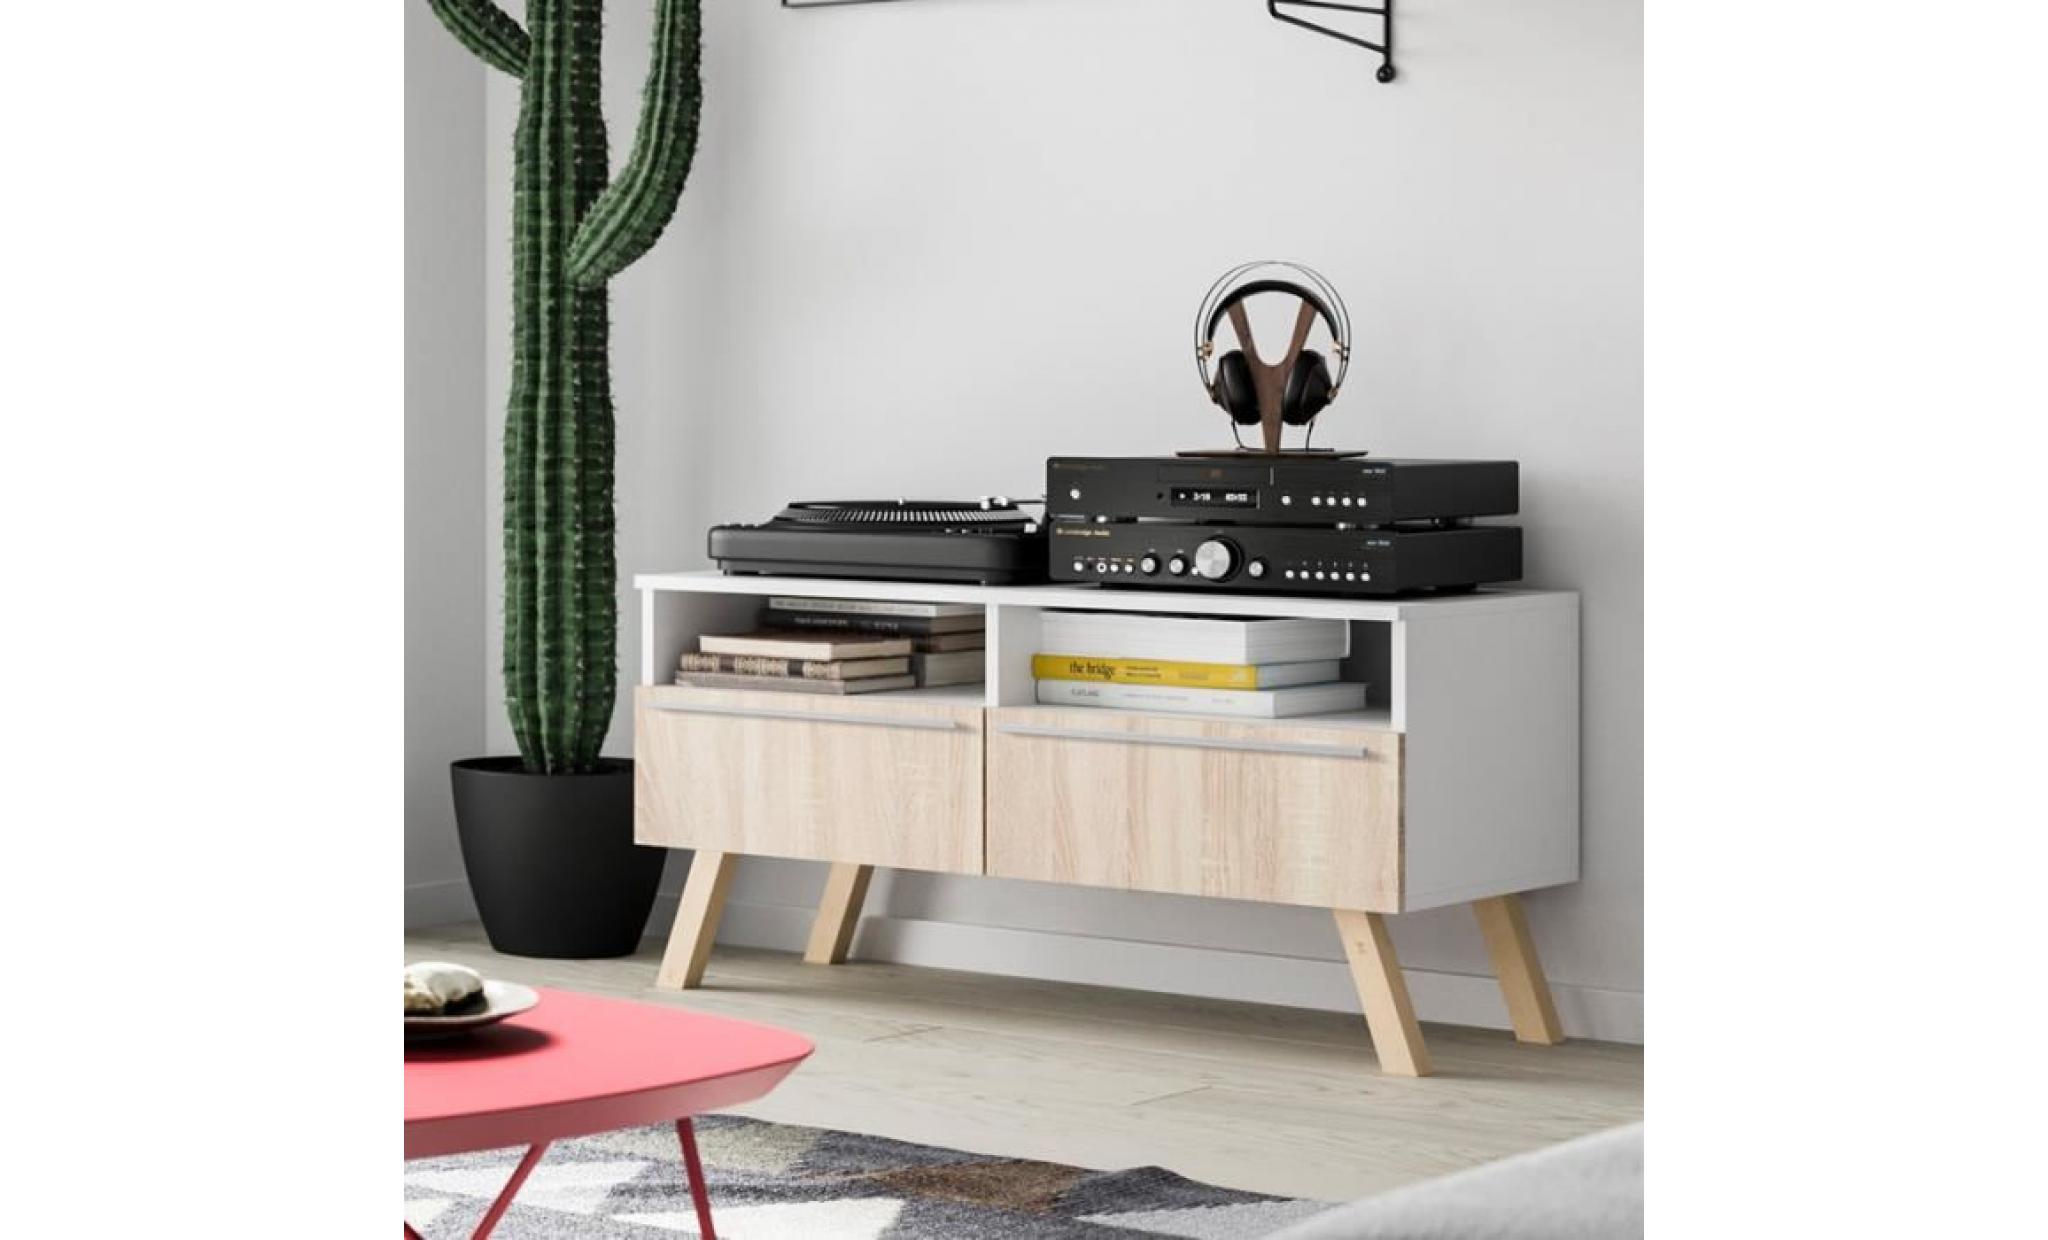 meuble tv / meuble salon   siena bois   100 cm   blanc mat / effet chêne   style scandi   forme minimaliste